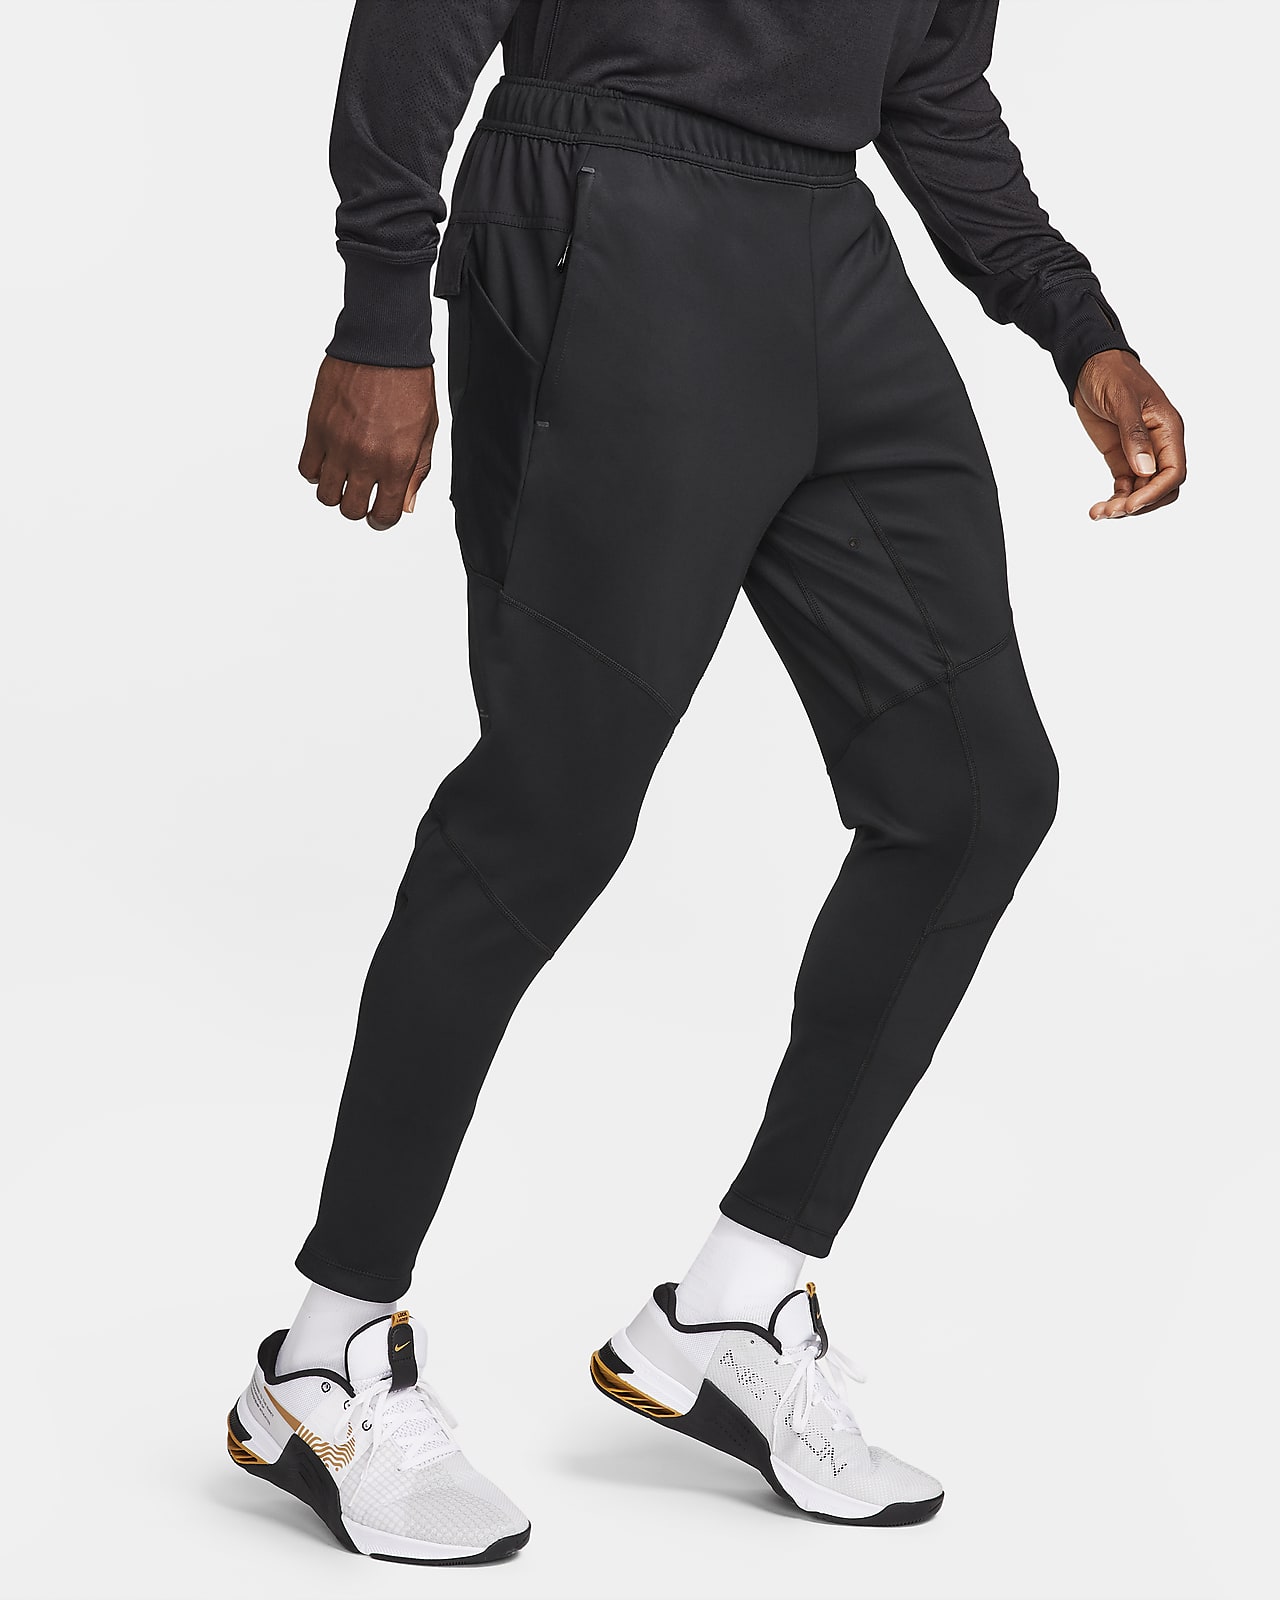 Nike DRI-FIT TRAINING Running Leggings PANTS Black XL